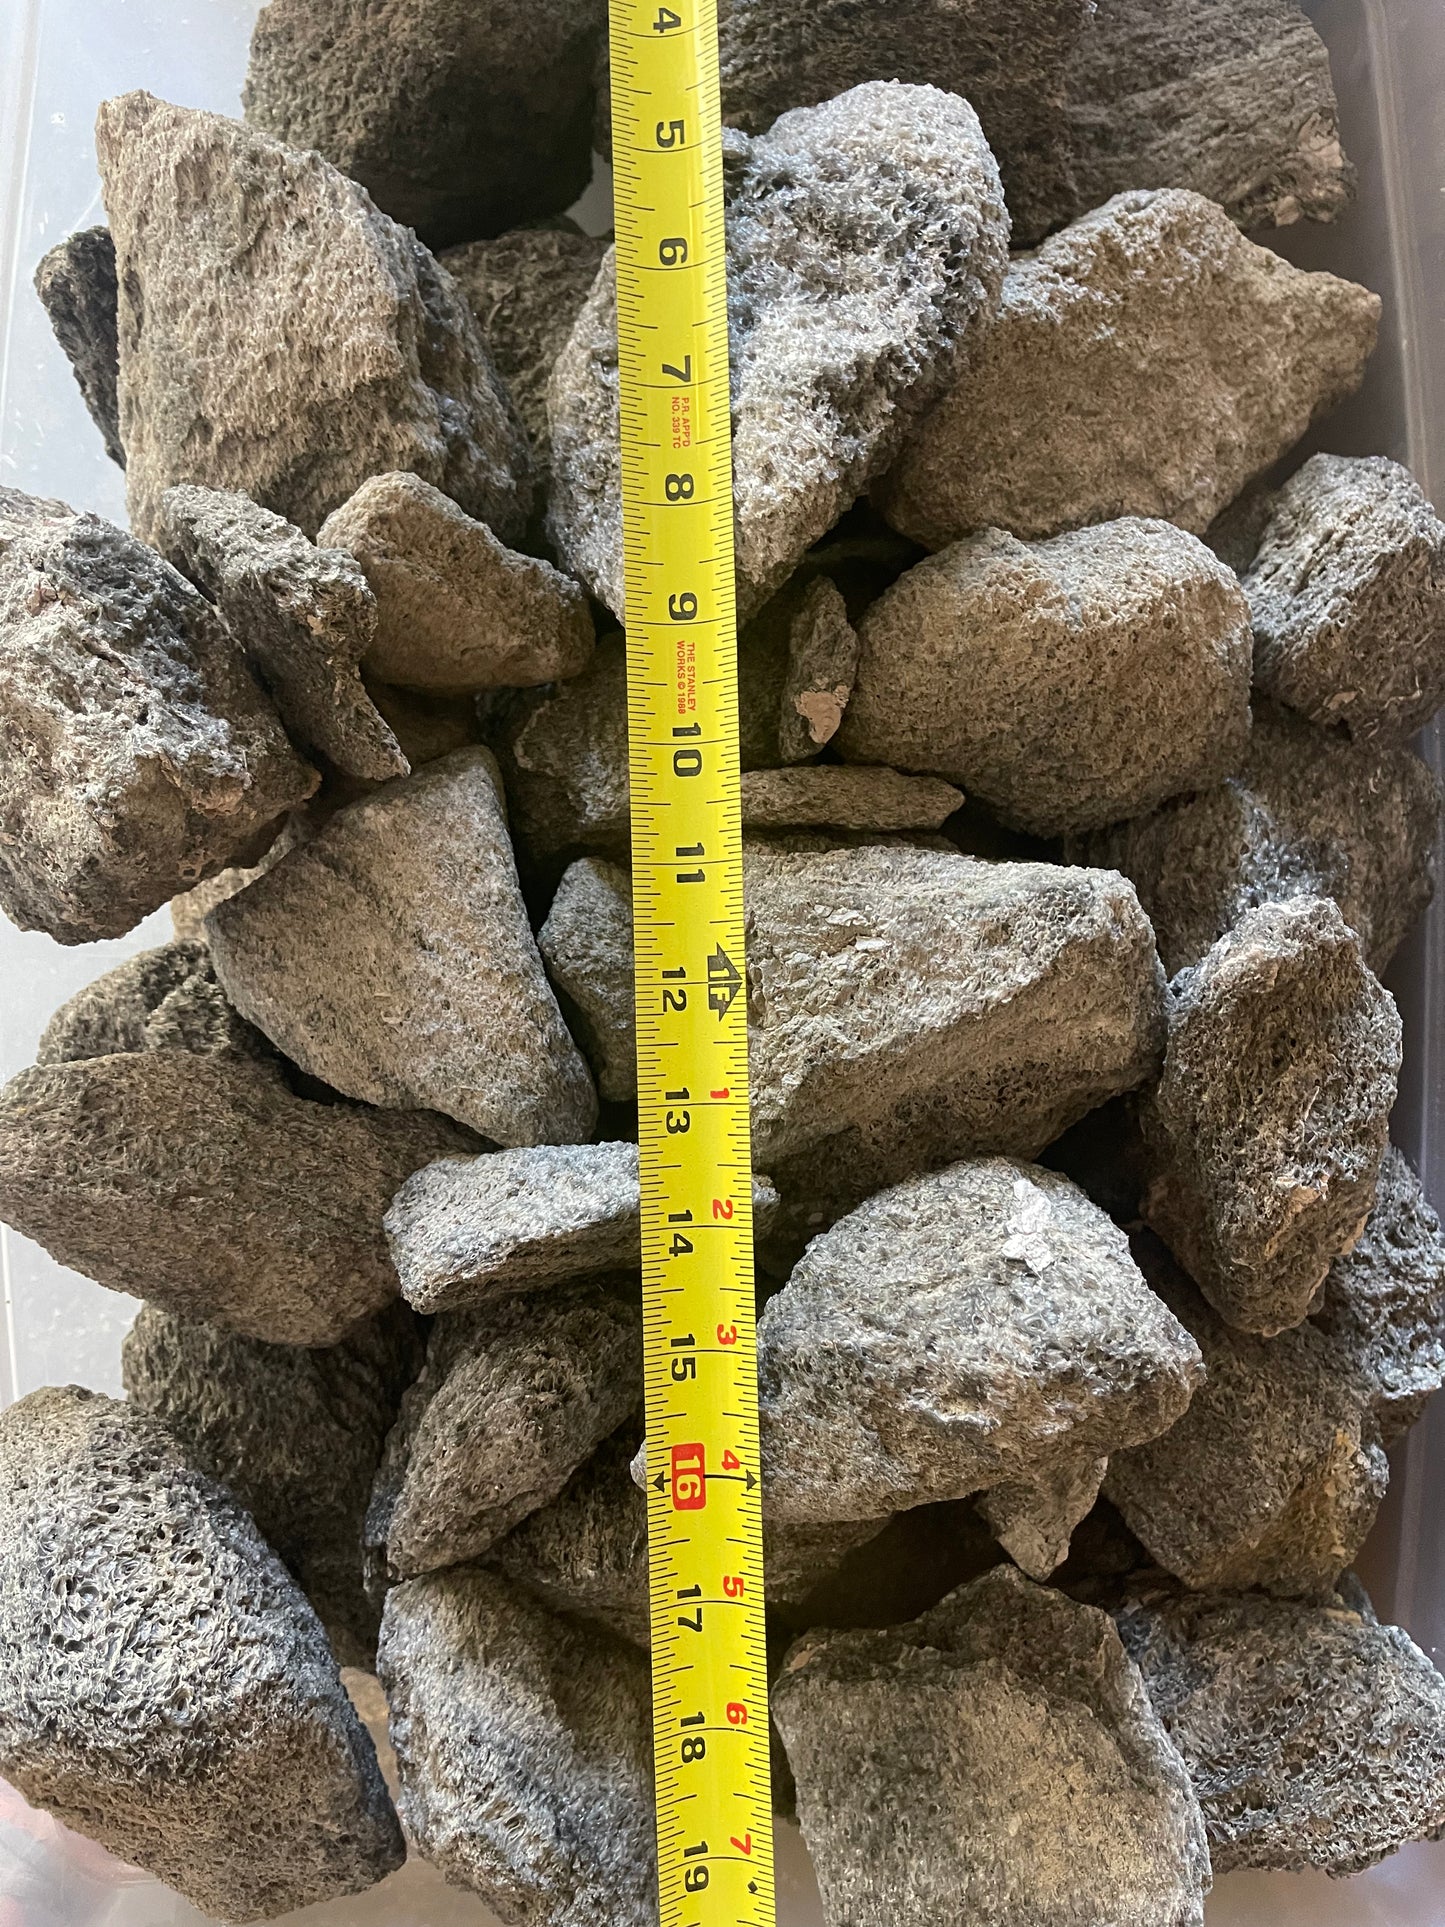 Premium Lightweight Pumice Stones for Vivariums - Natural, Durable, and Versatile